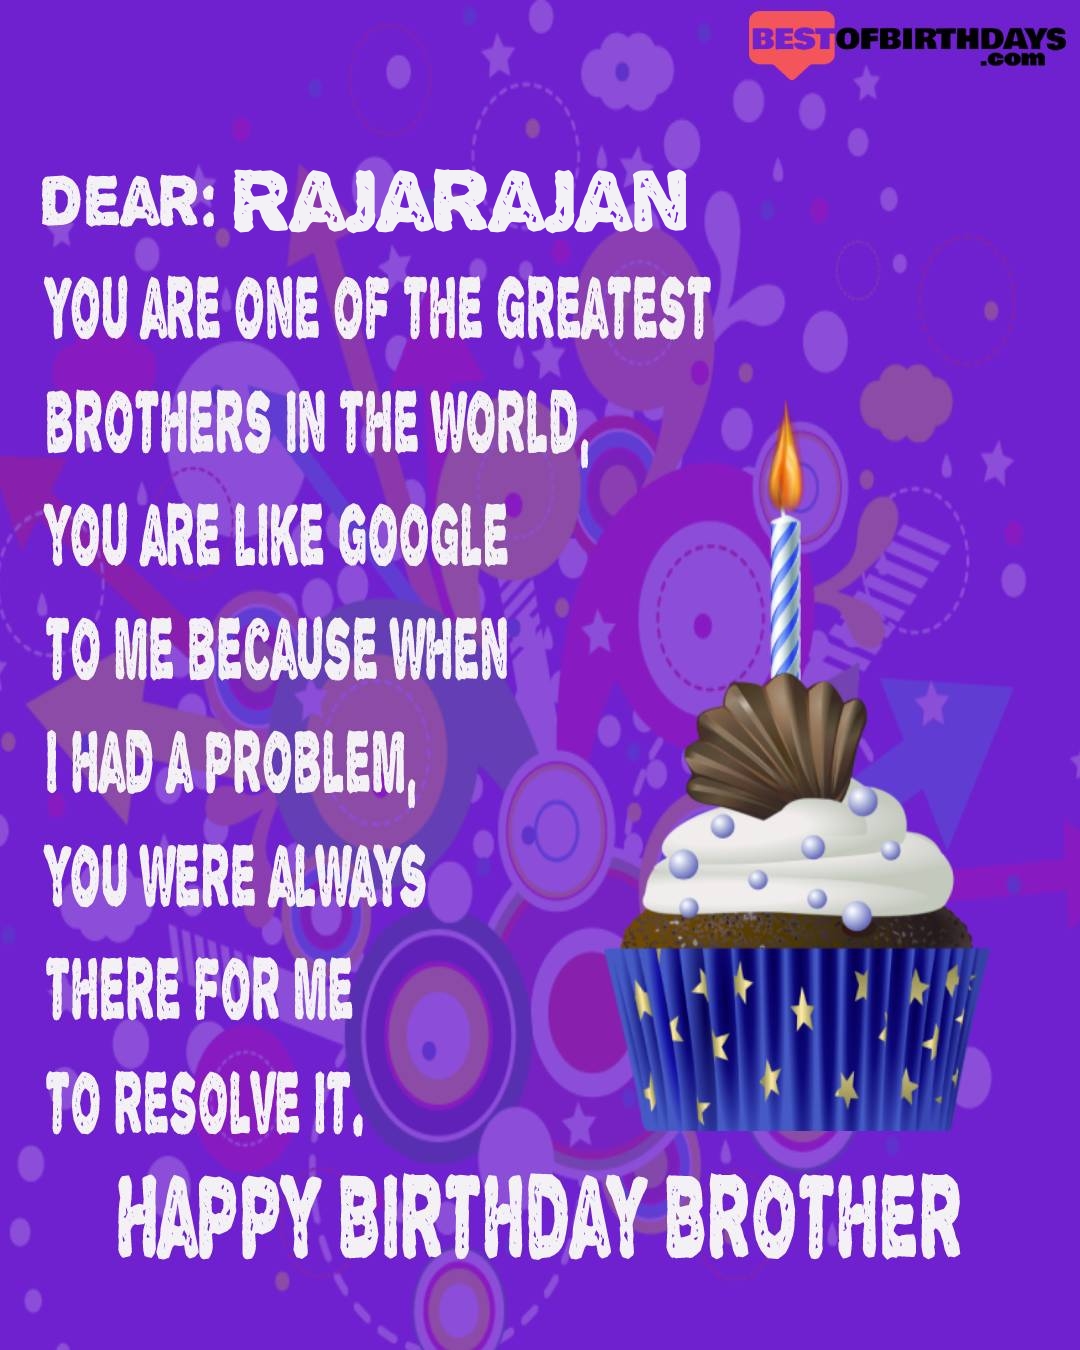 Happy birthday rajarajan bhai brother bro